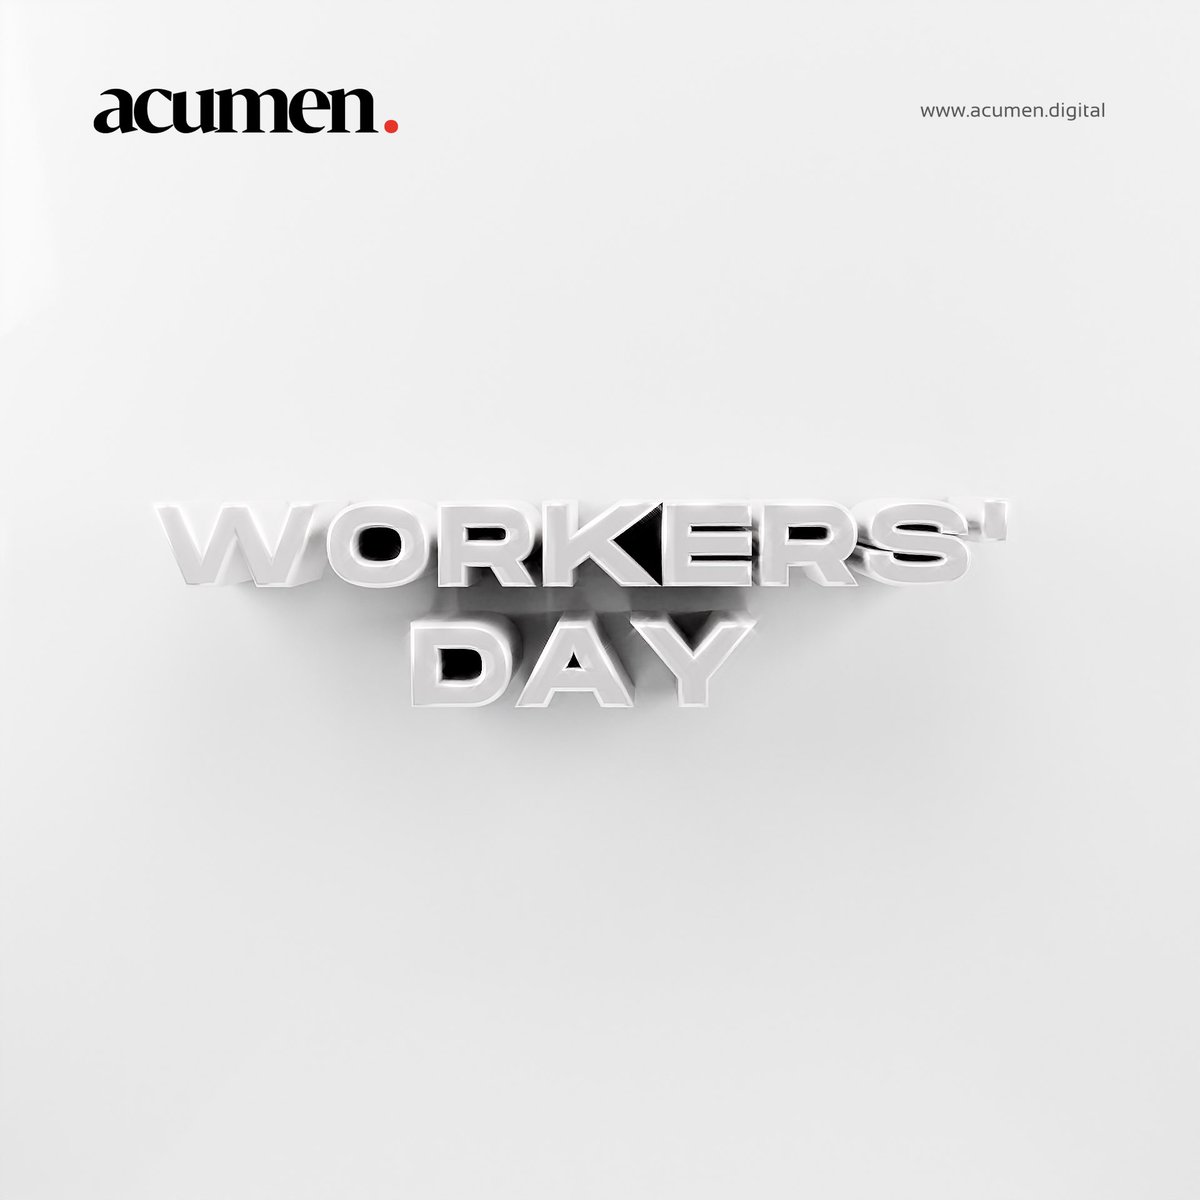 It’s okay to take a break. Happy International Workers Day! 
#WorkersDay2022 #WorkersDay #acumendigital